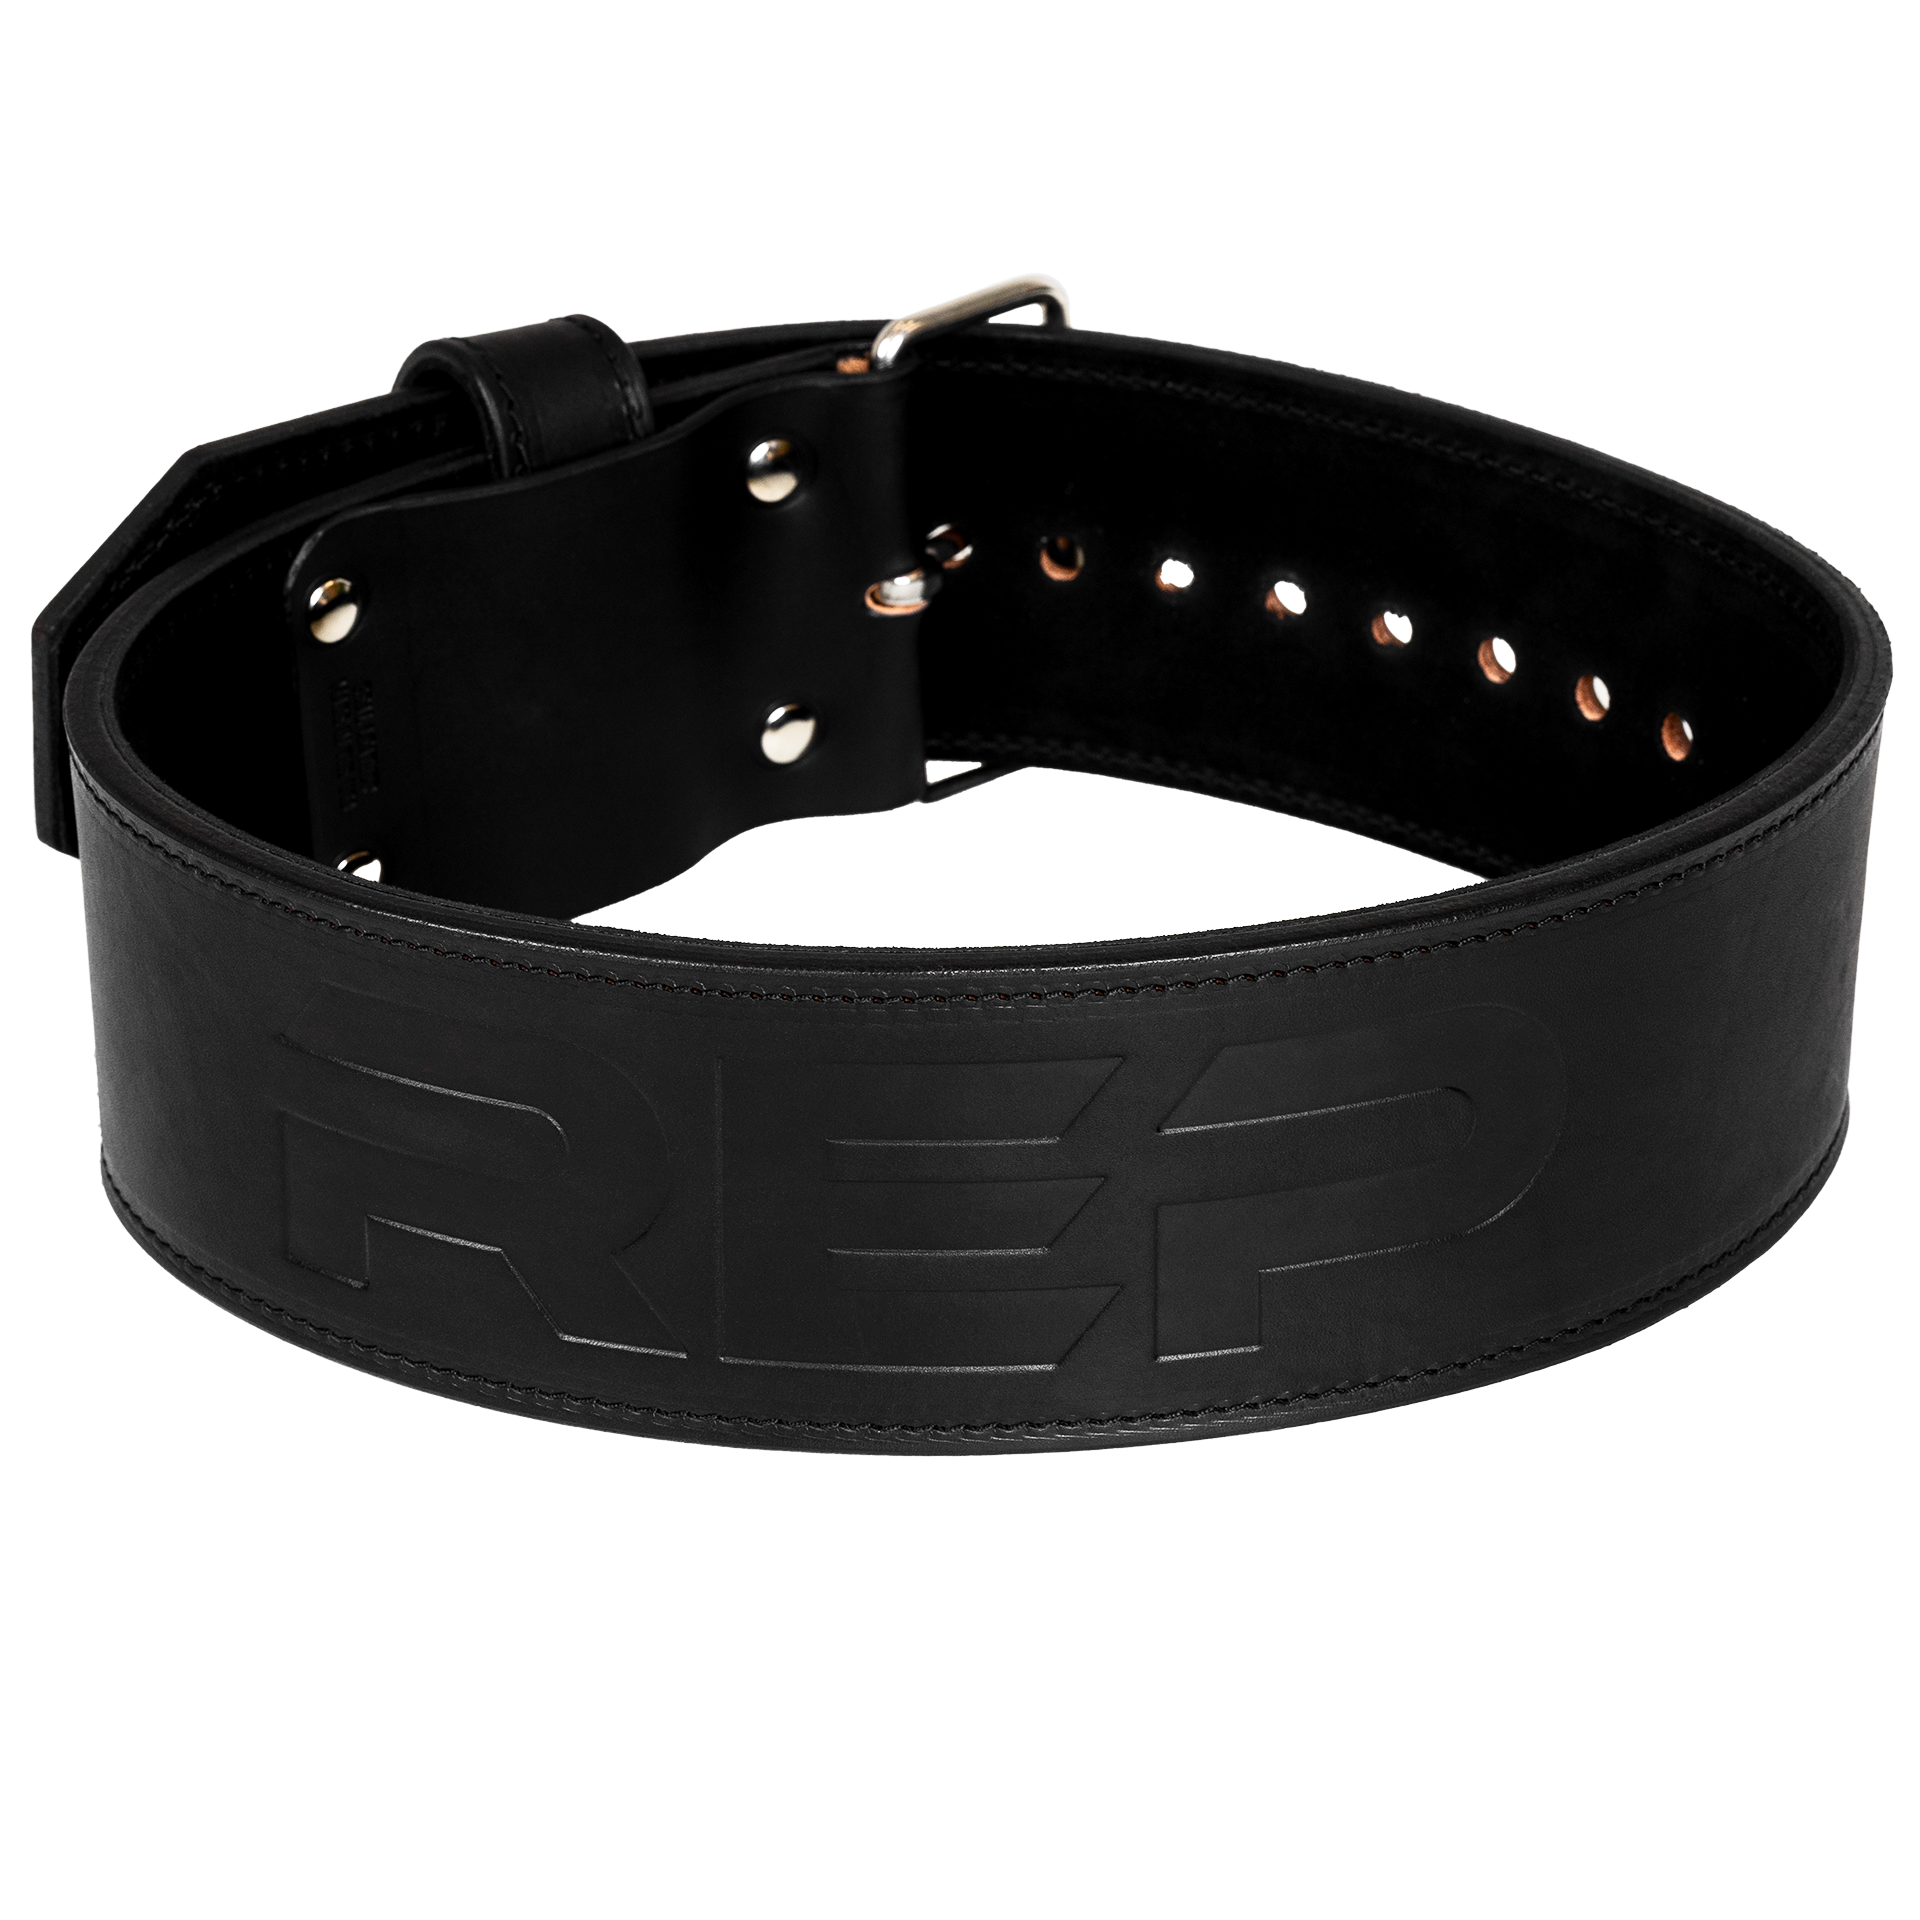 REP USA Premium Leather Lifting Belt - Black / Small